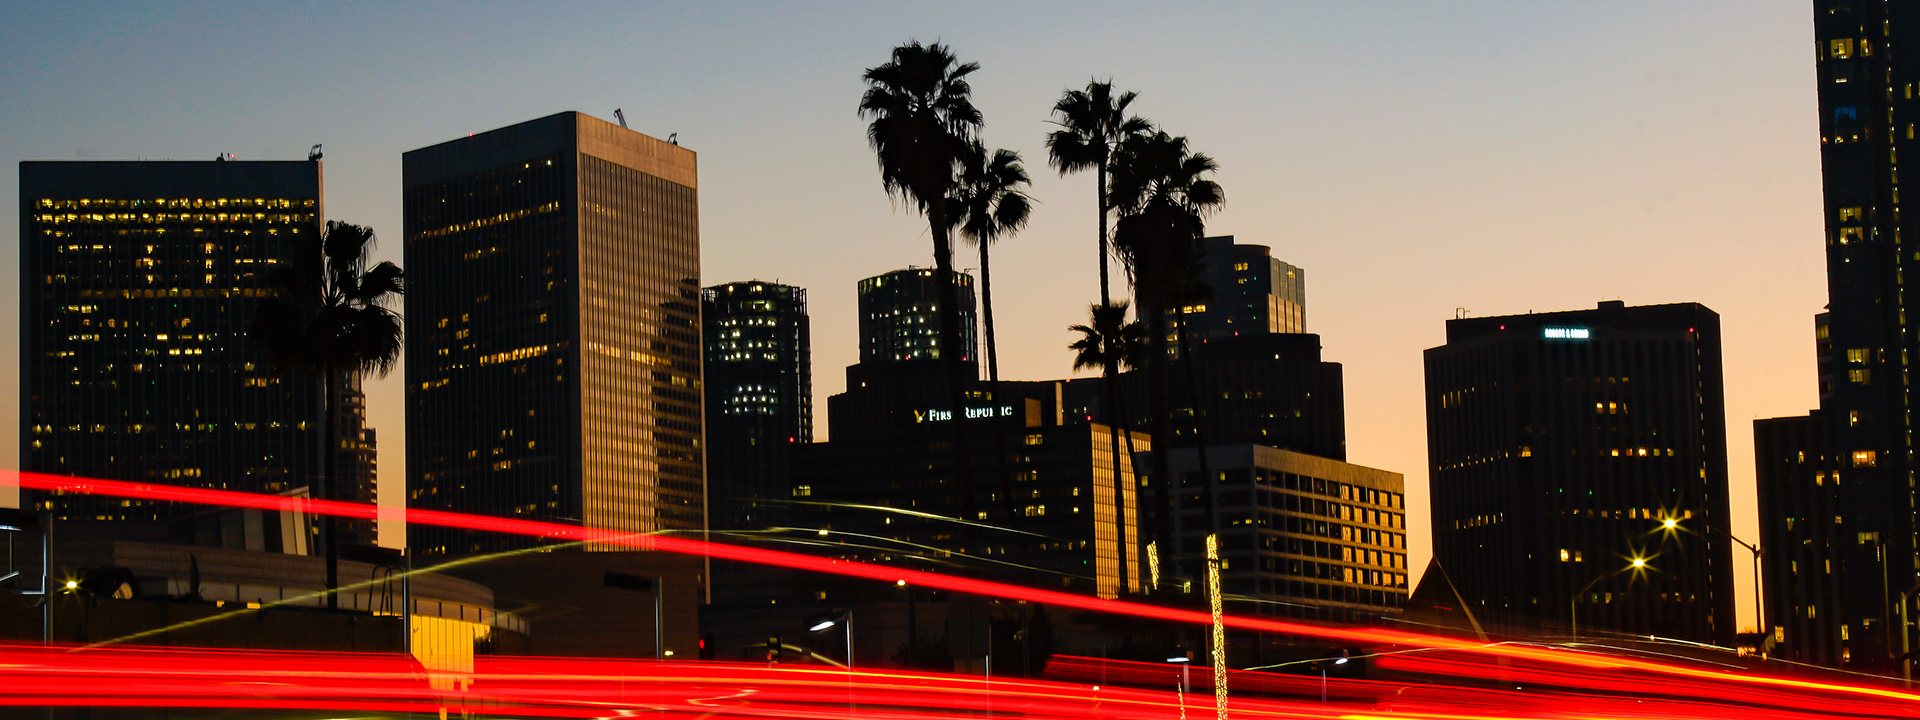 Skyscrapers in Los Angeles with dusk lighting